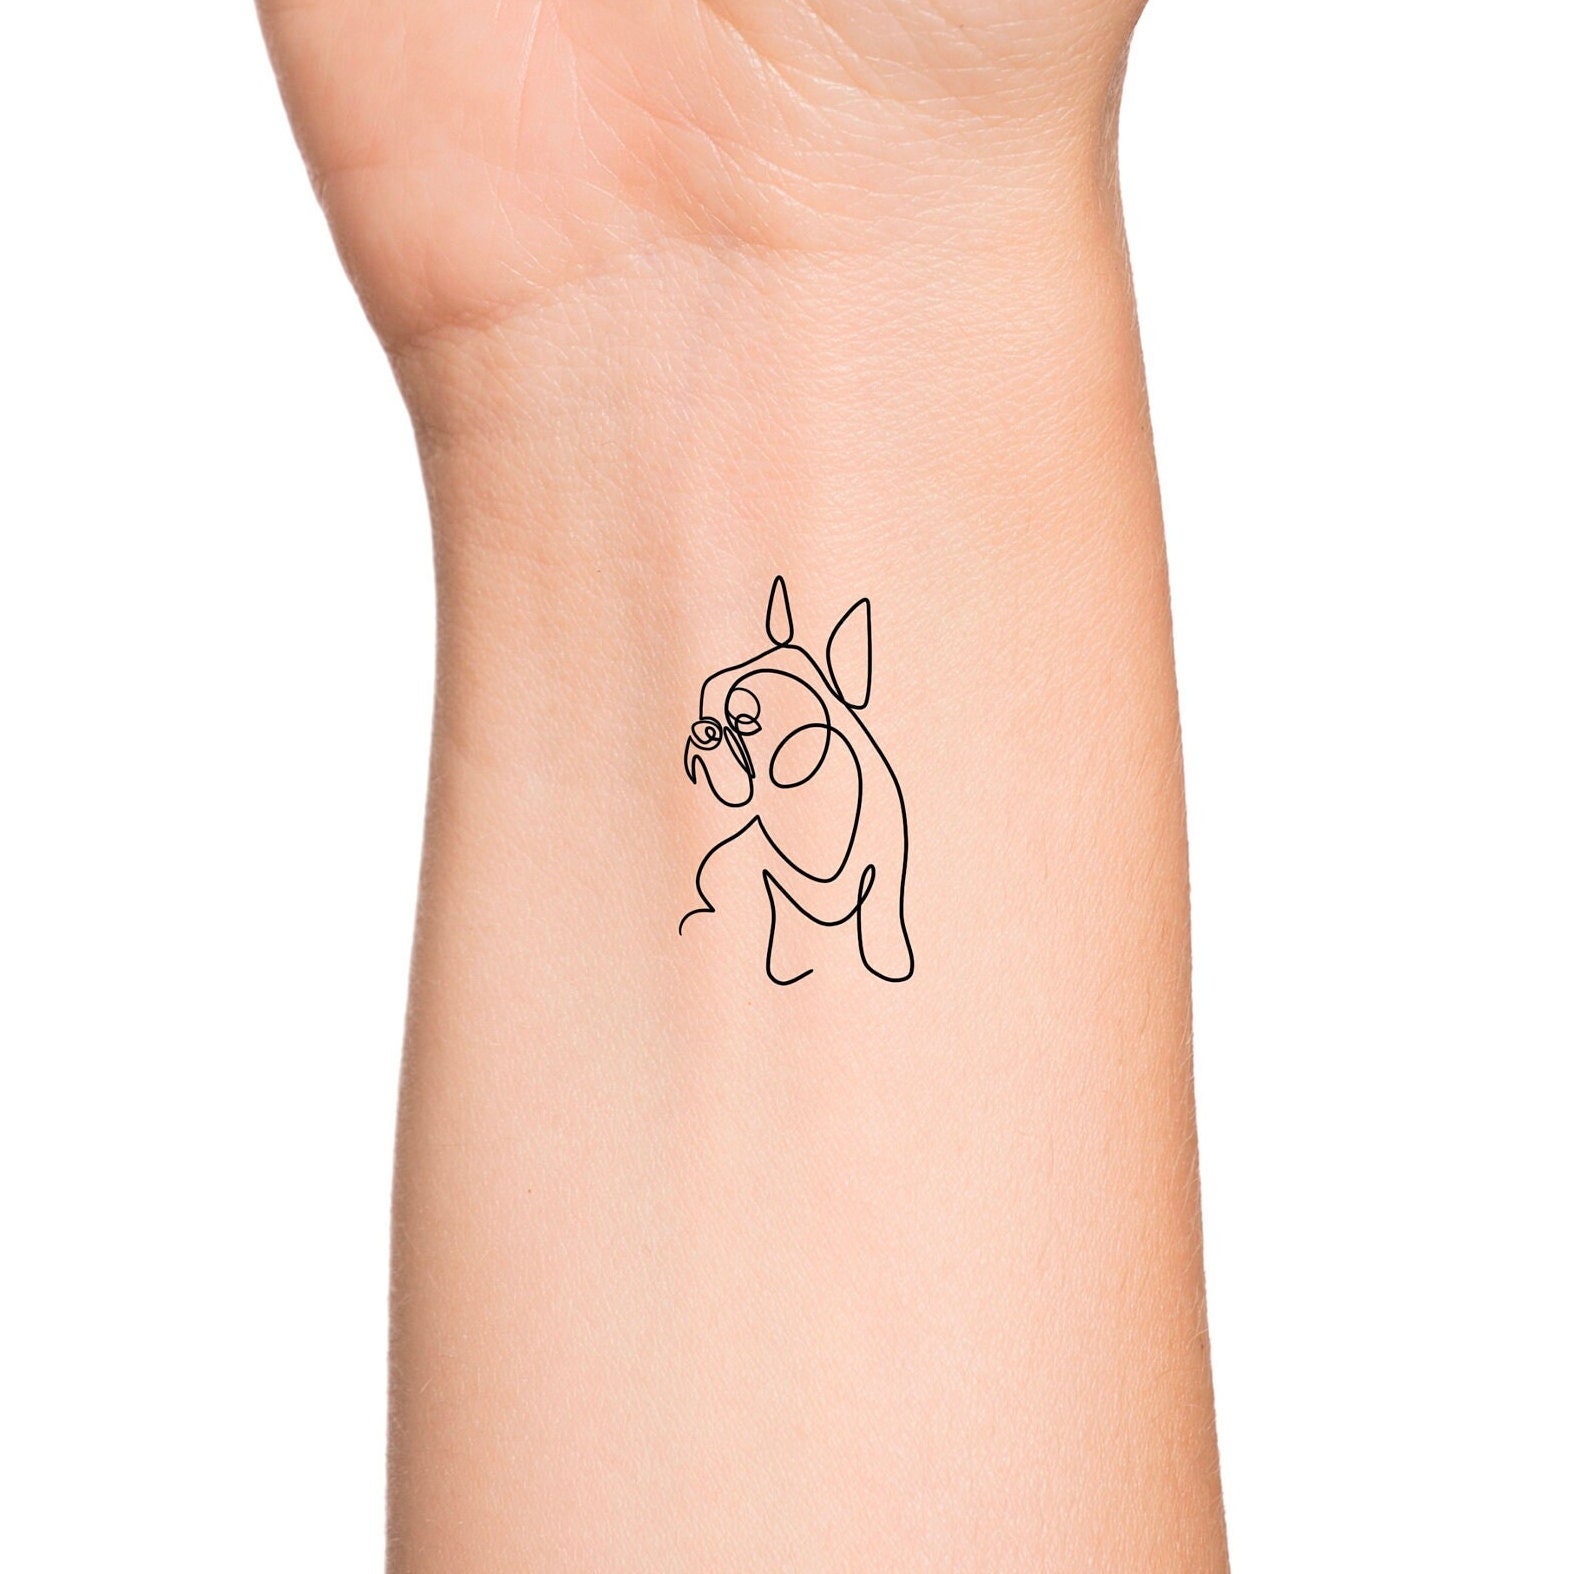 Top 18 Bulldog Tattoo Design Ideas For Men and Women  PetPress